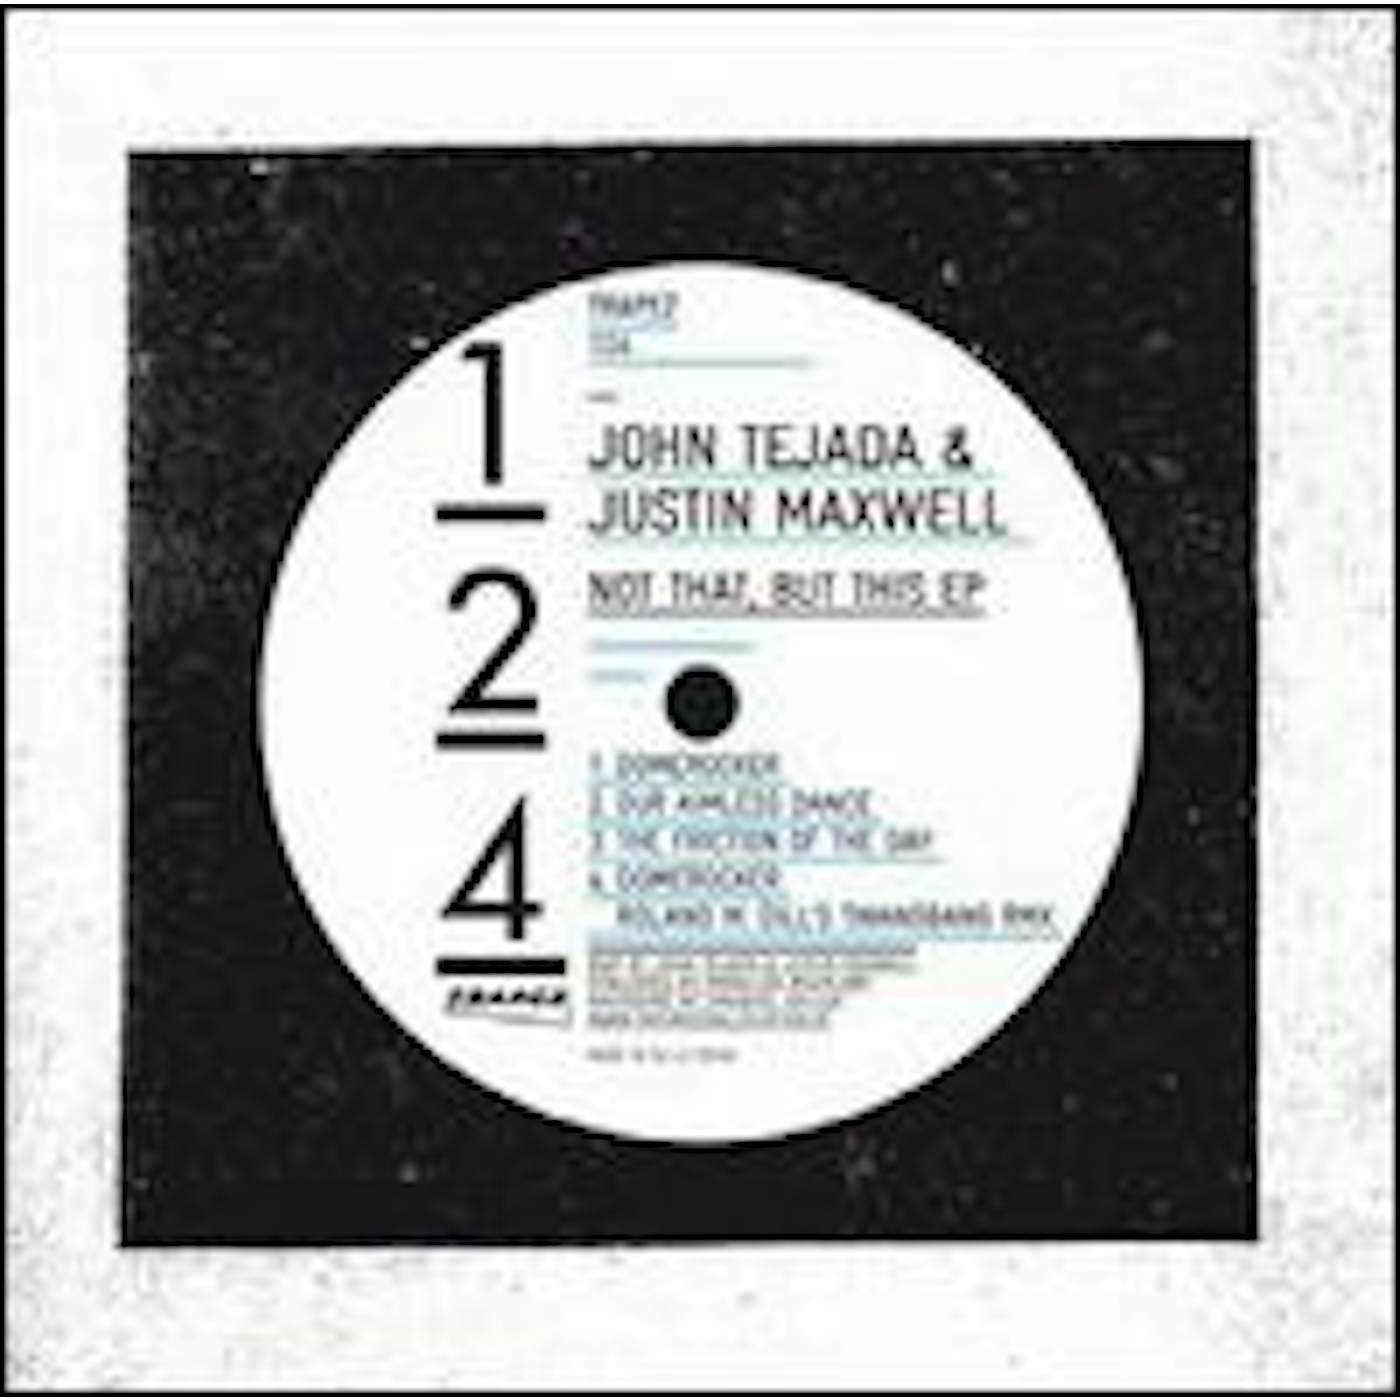 John Tejada & Justin Maxwell NOT THAT BUT THIS Vinyl Record